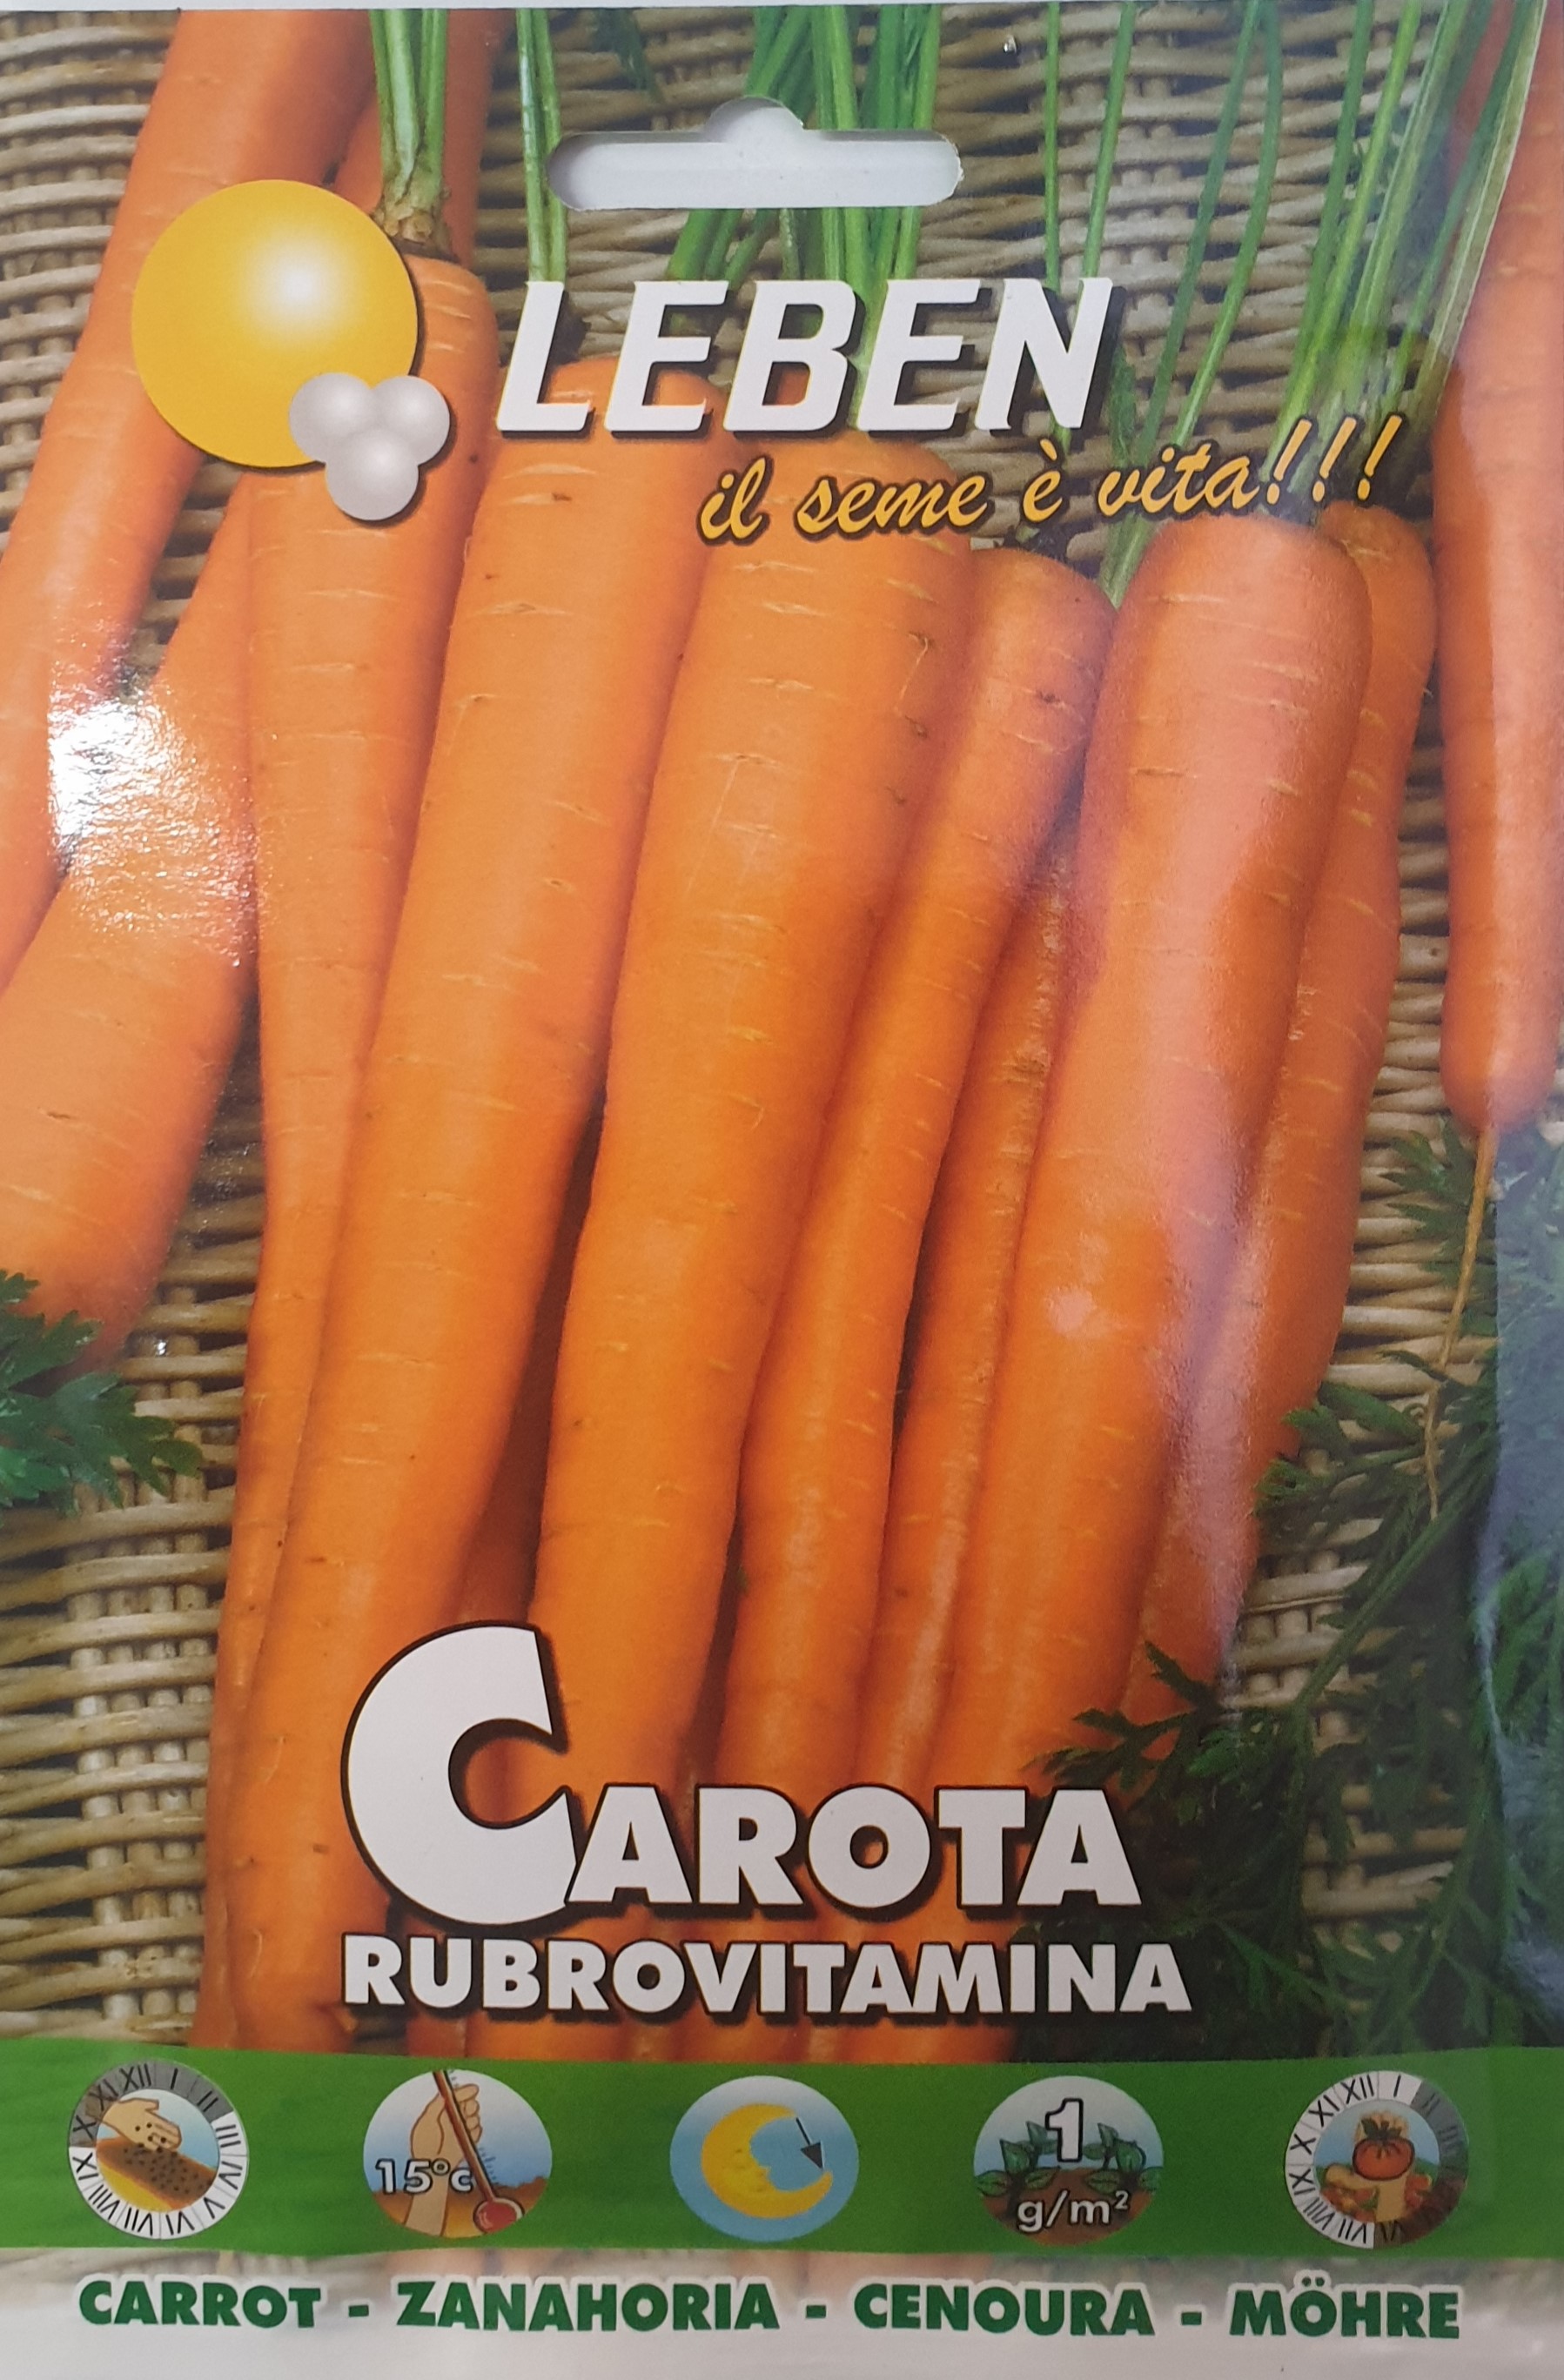 Carrot Rubrovitamina Leben by Franchi